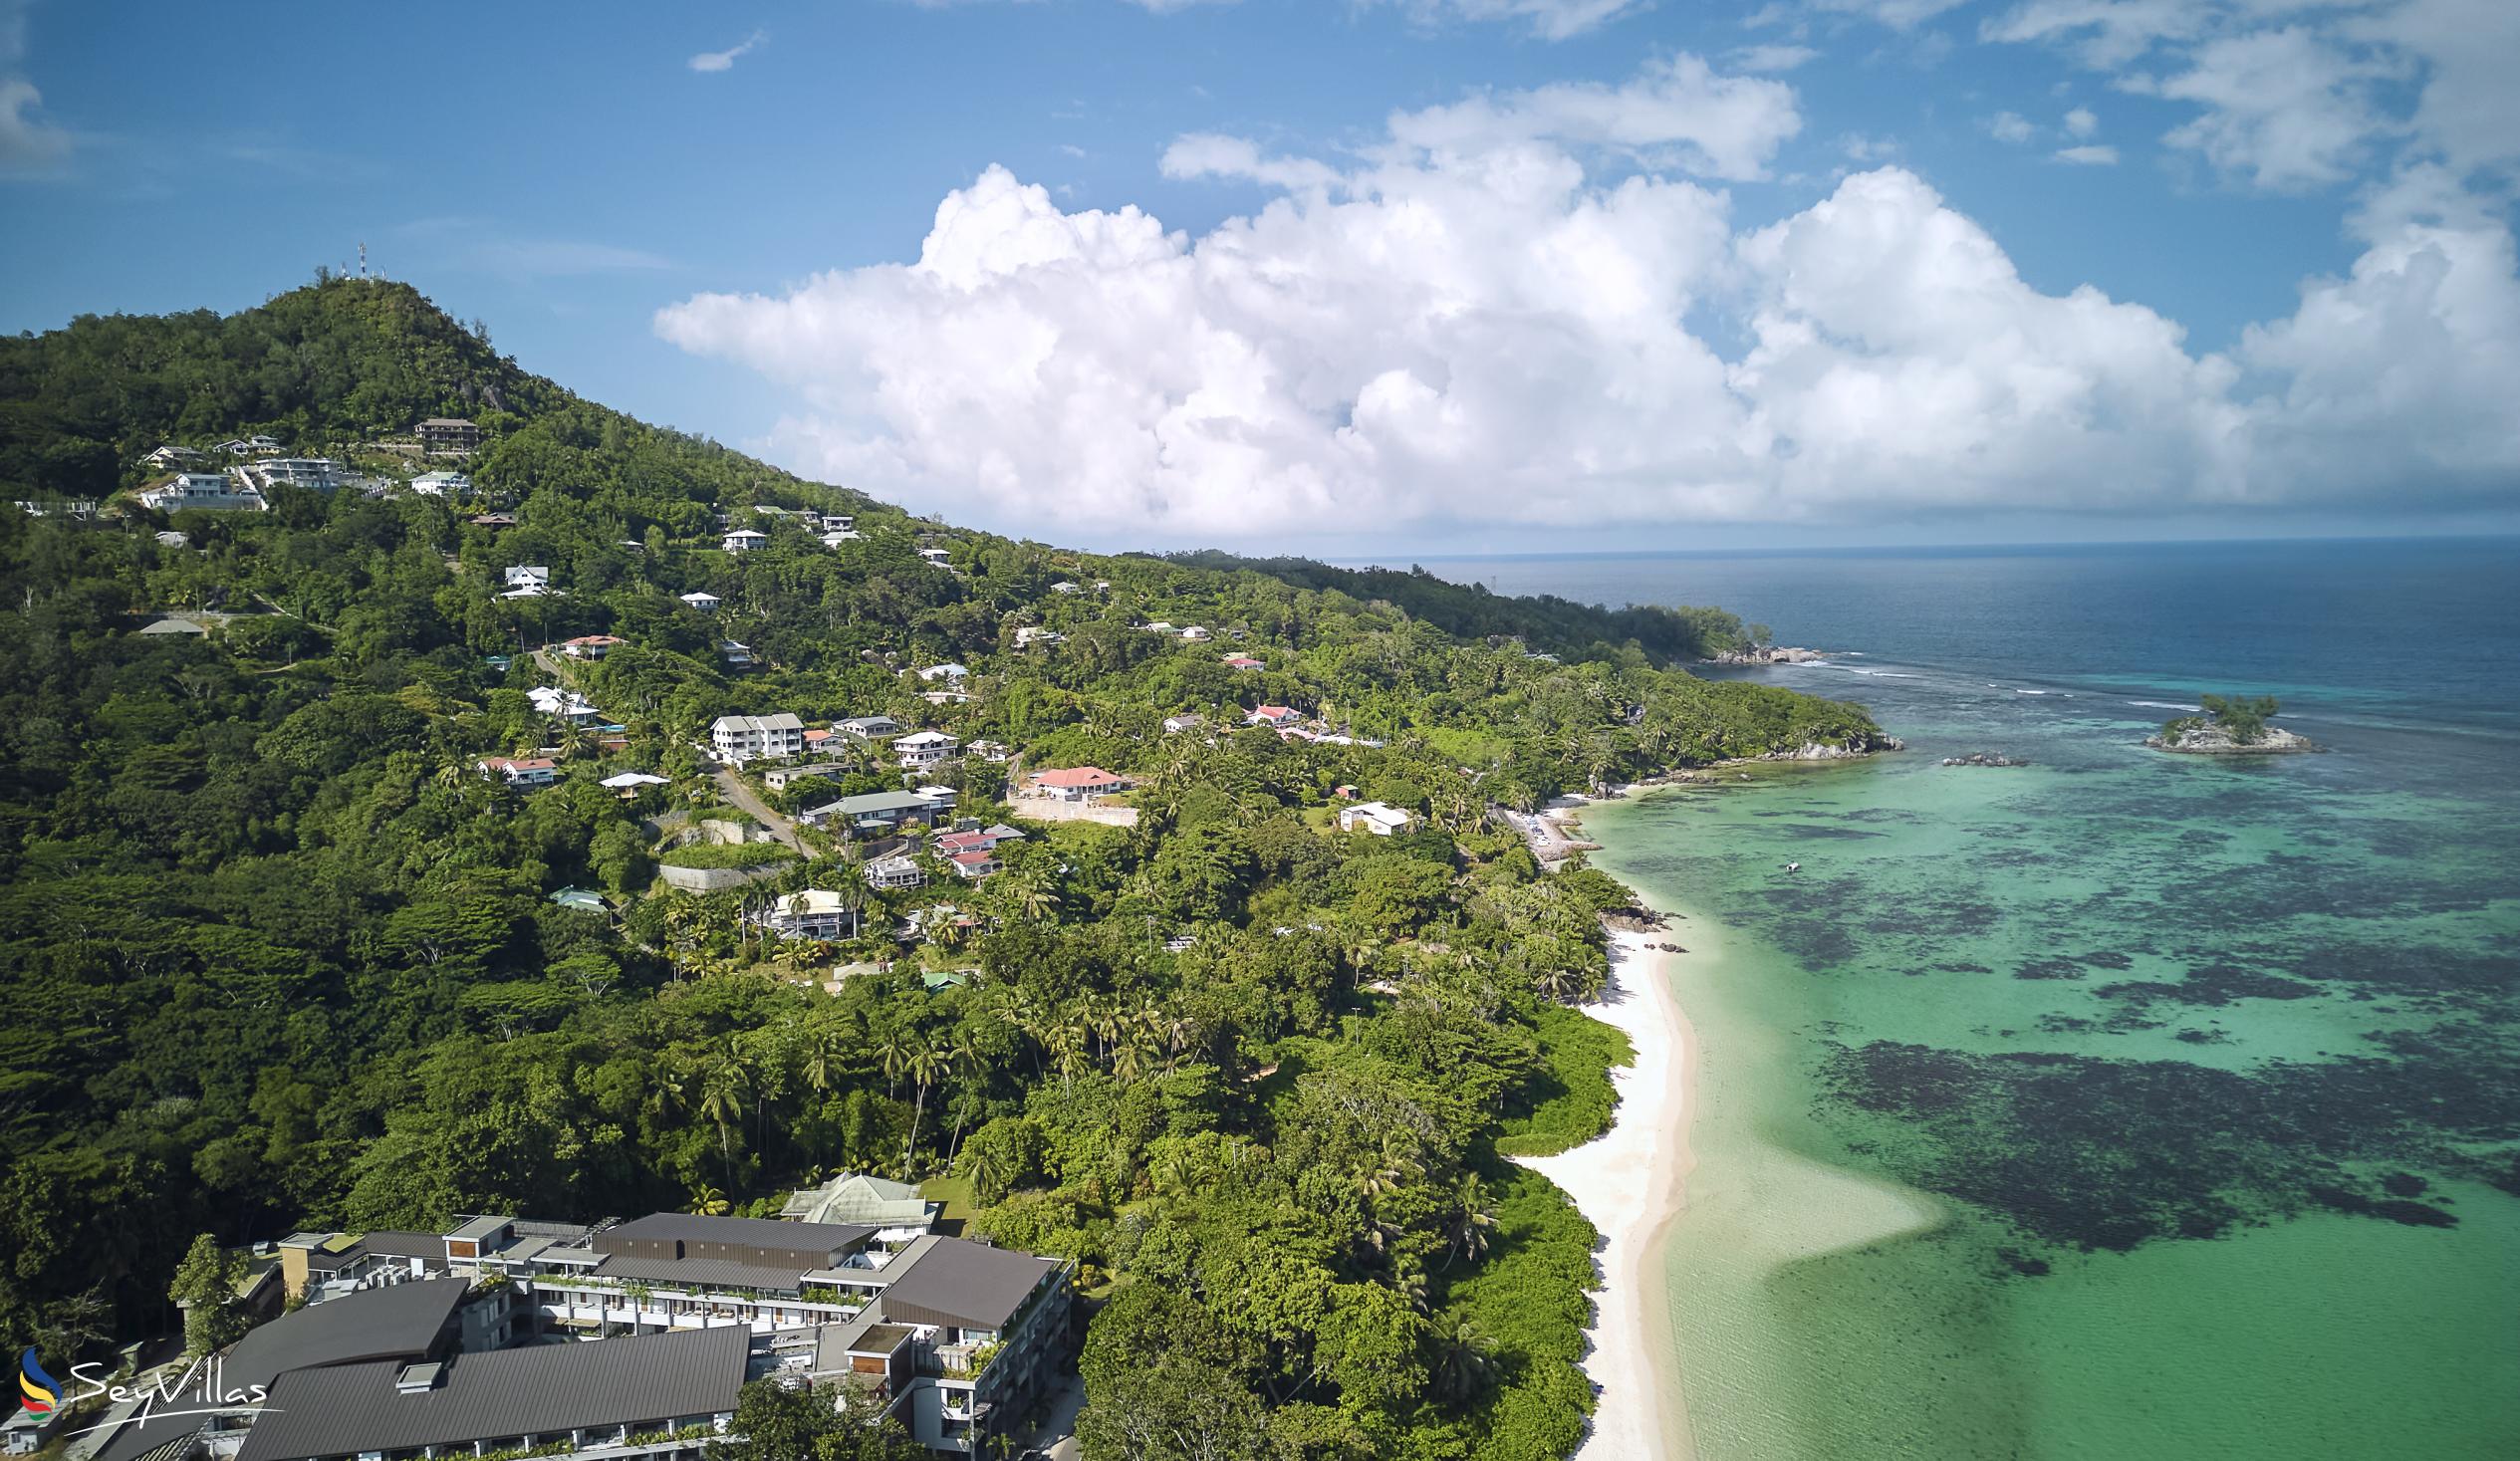 Photo 26: laila Resort - Location - Mahé (Seychelles)